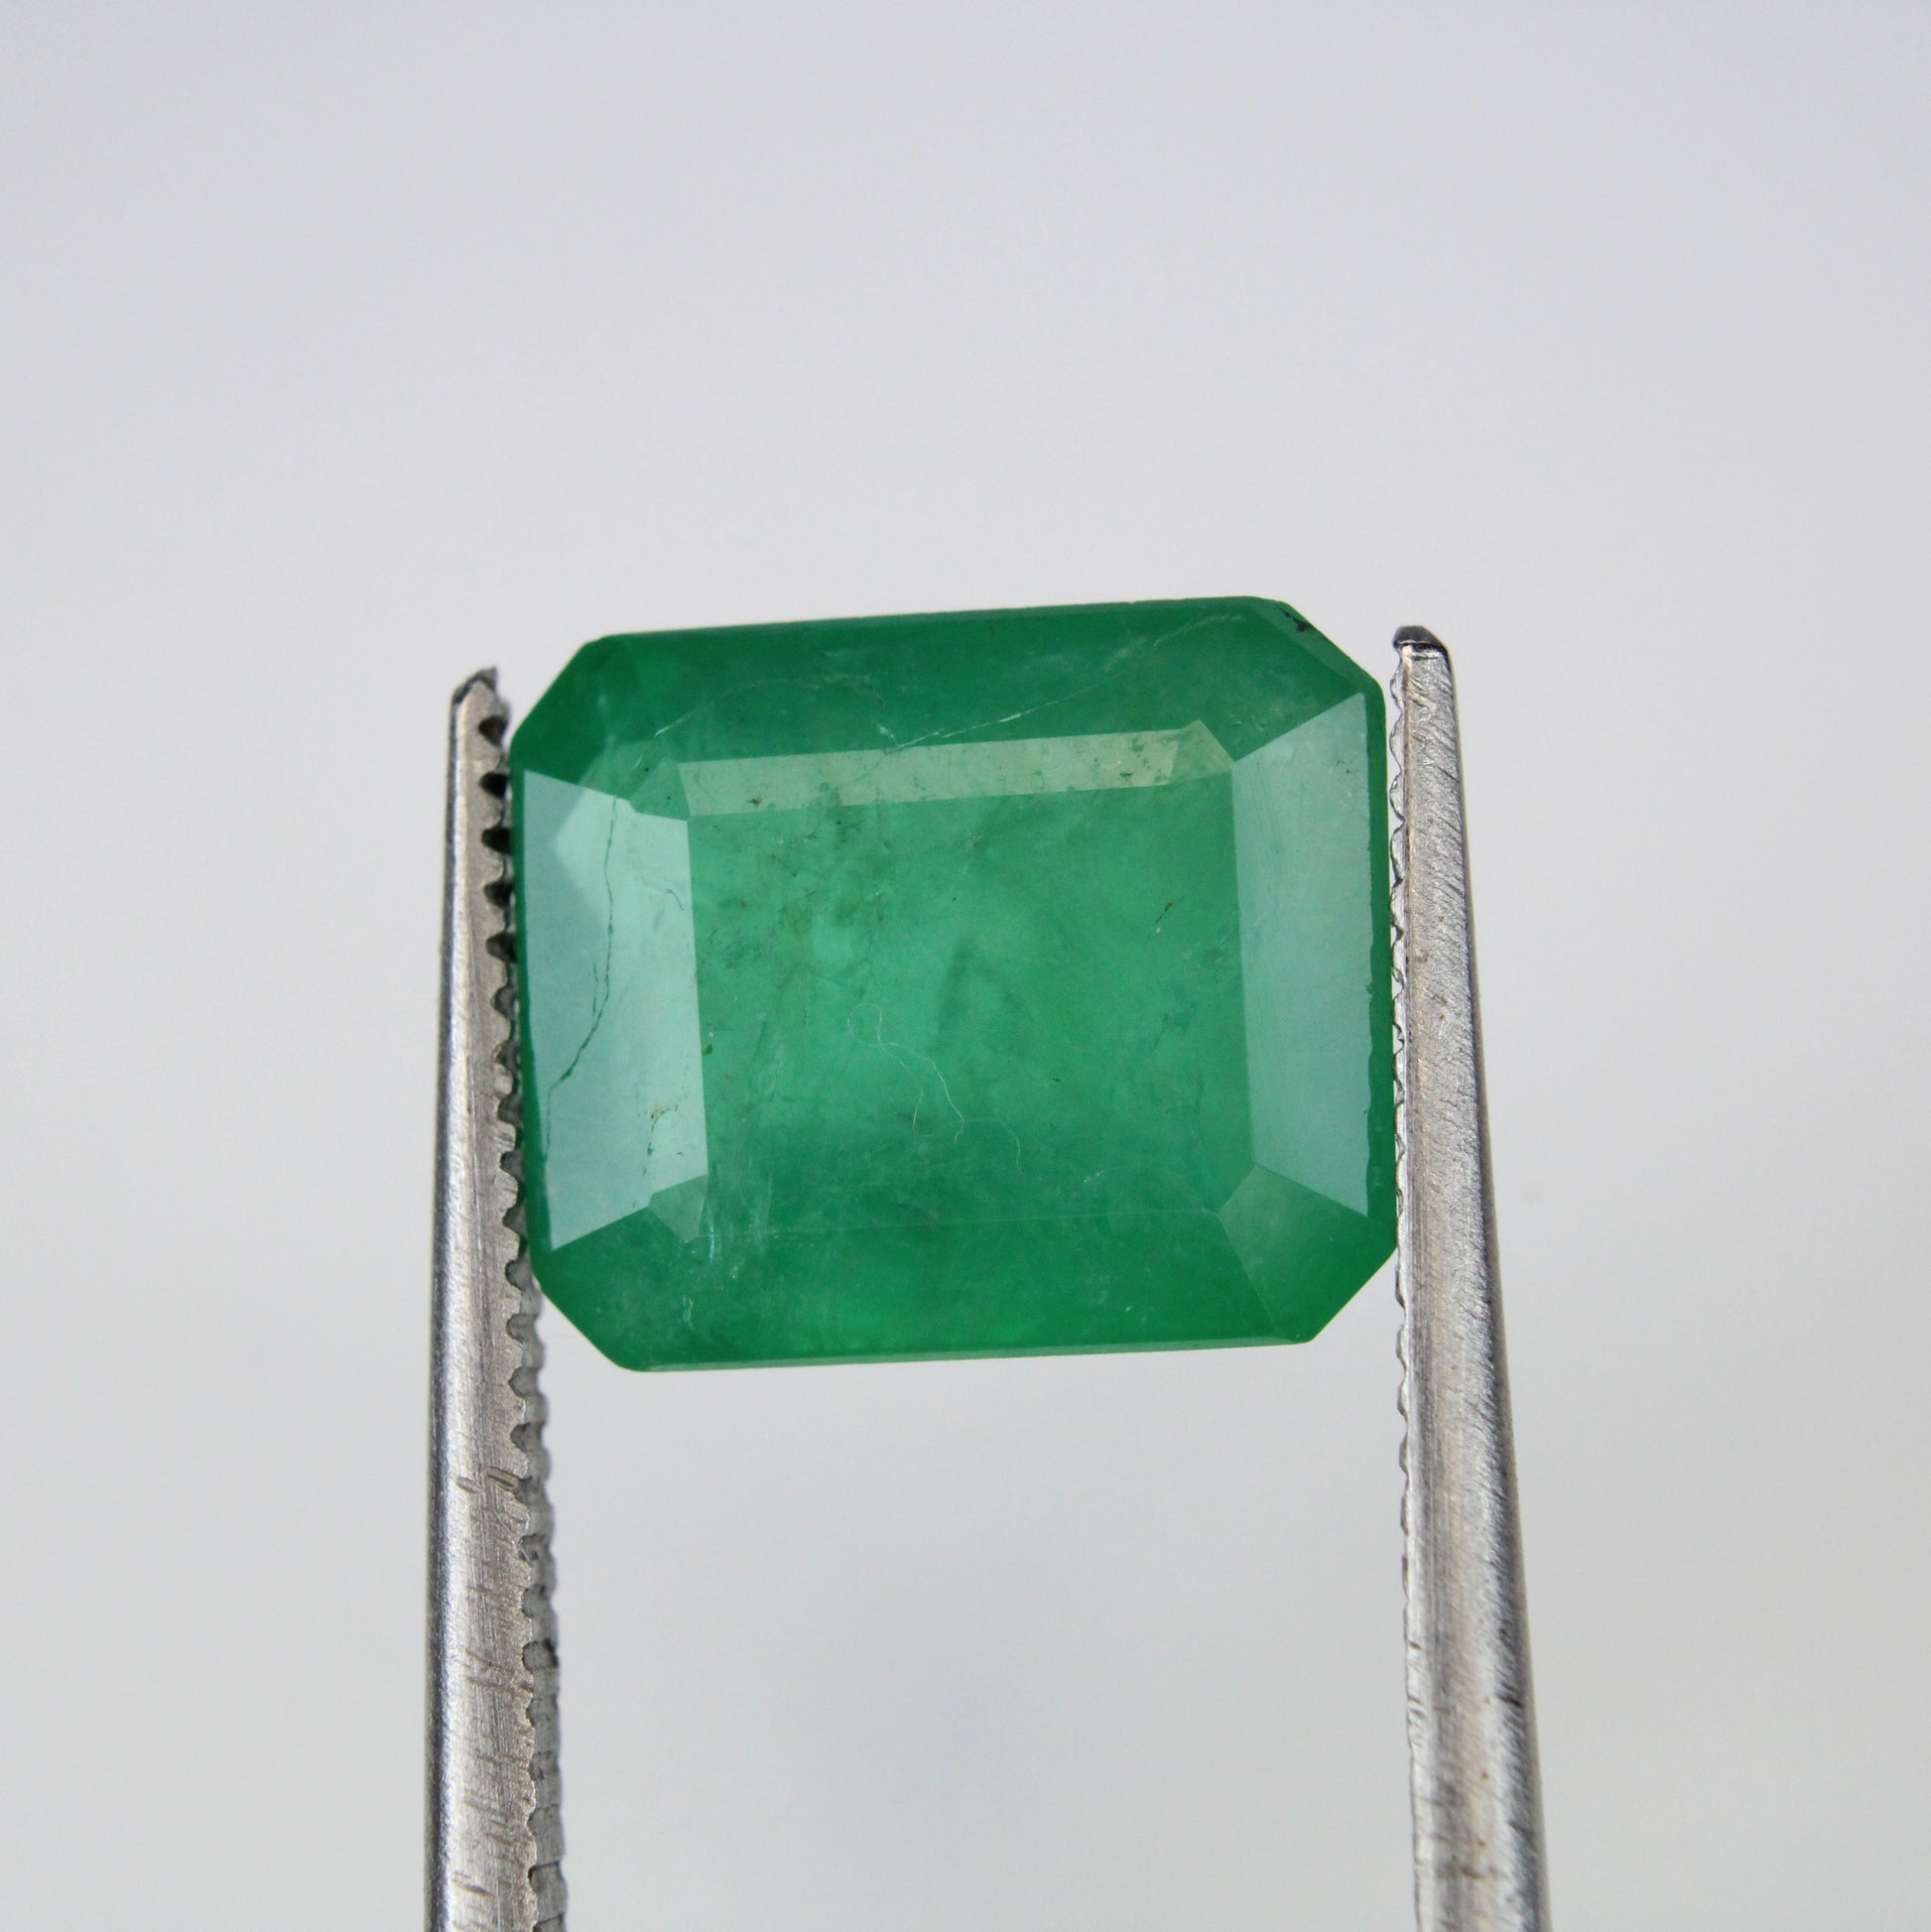 3.37 Ct Emerald | Northern Gem Supply